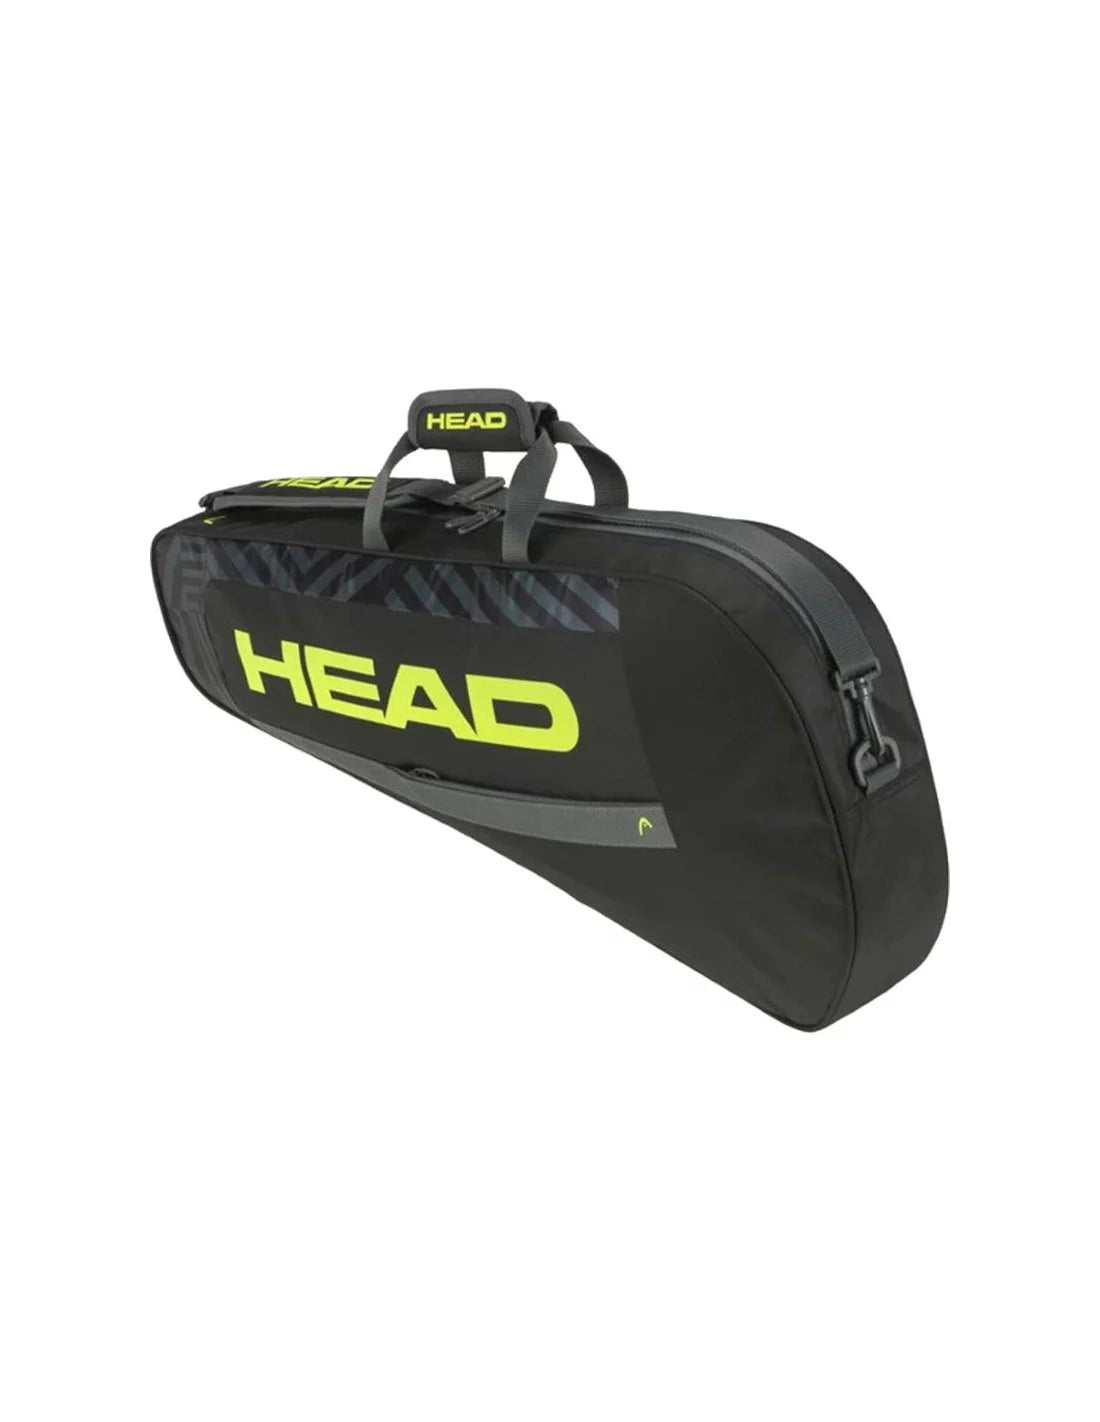 Head Base Racquet Bag S BKNY - 261423